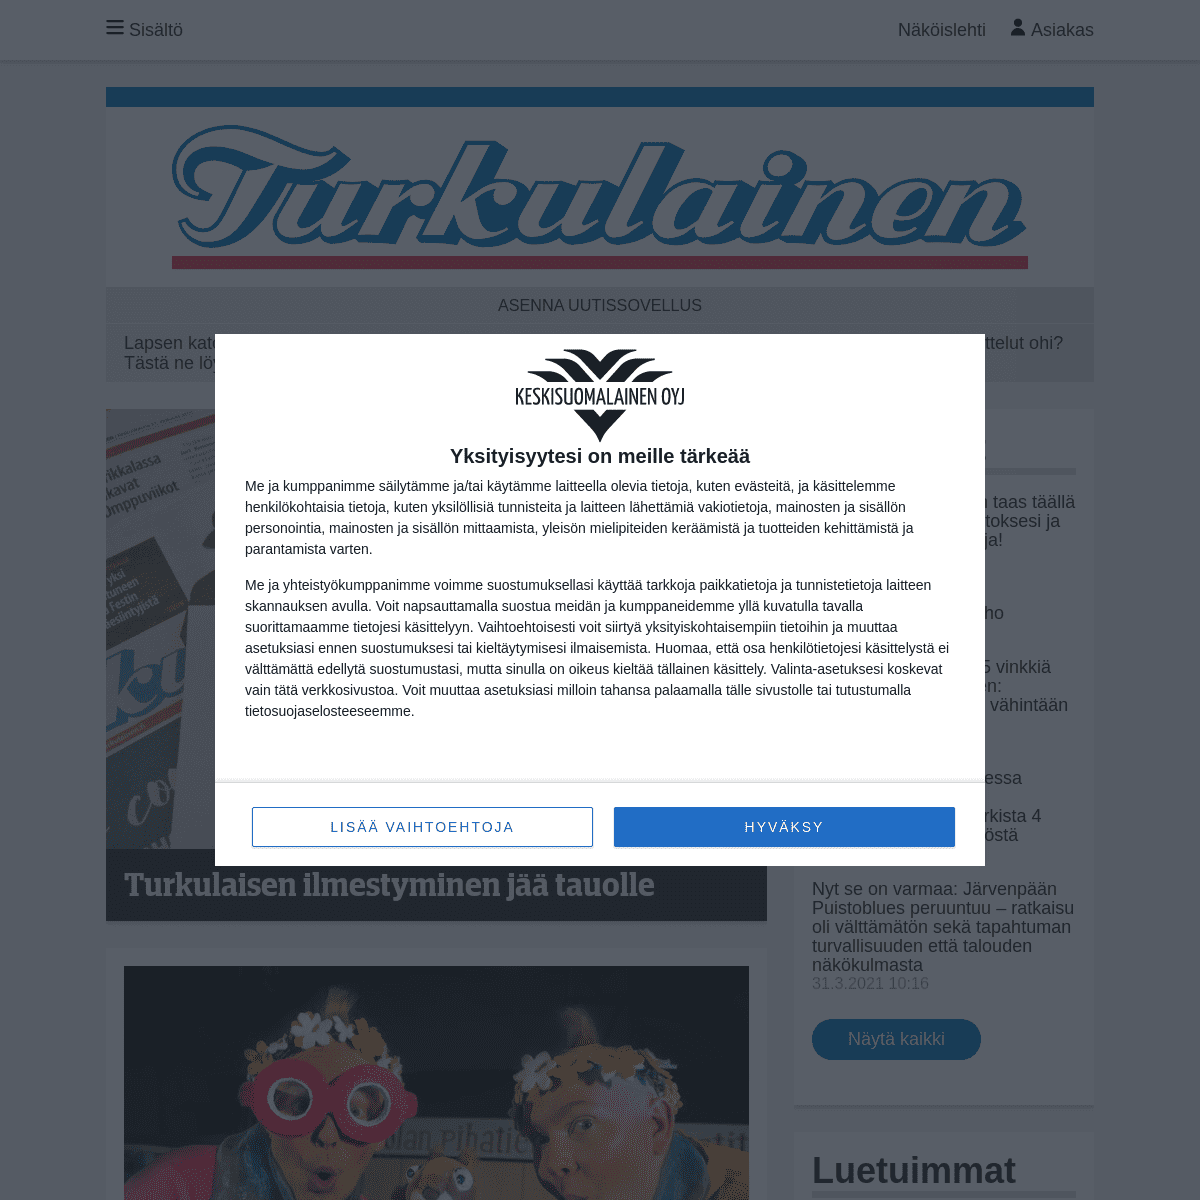 A complete backup of https://turkulainen.fi